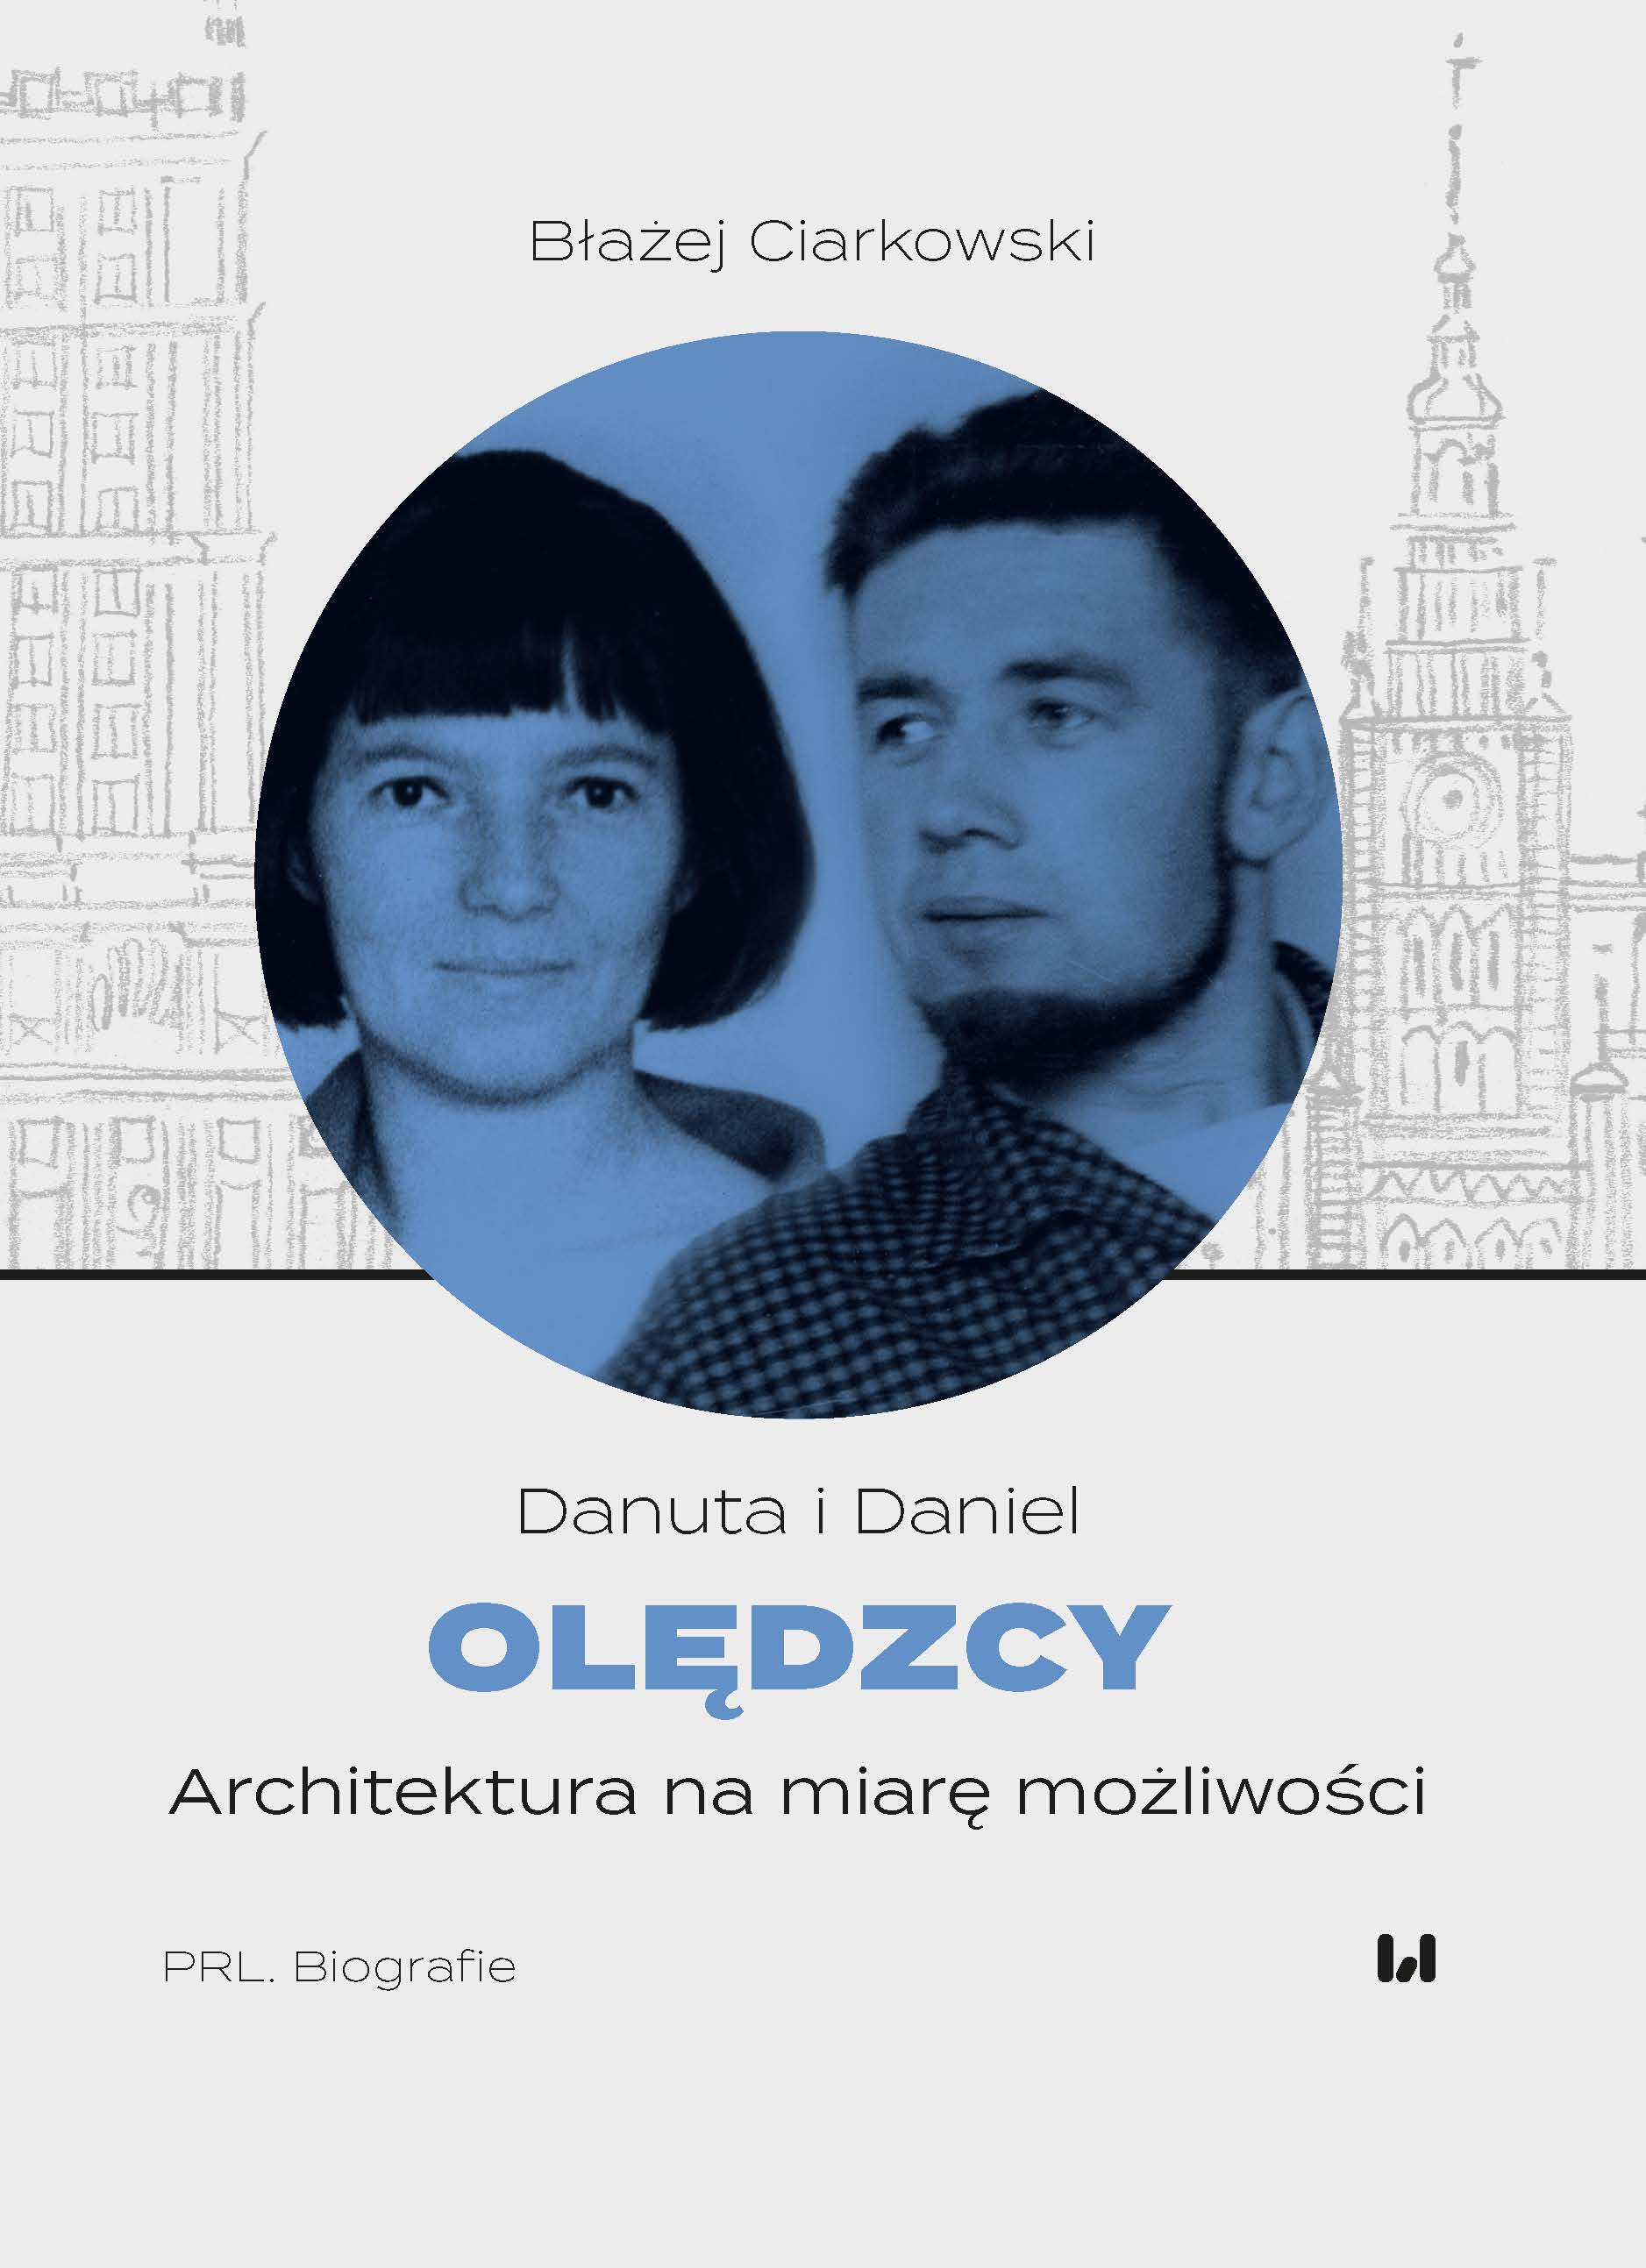 Danuta and Daniel Oledzki. Architecture worthy of its epoch Cover Image